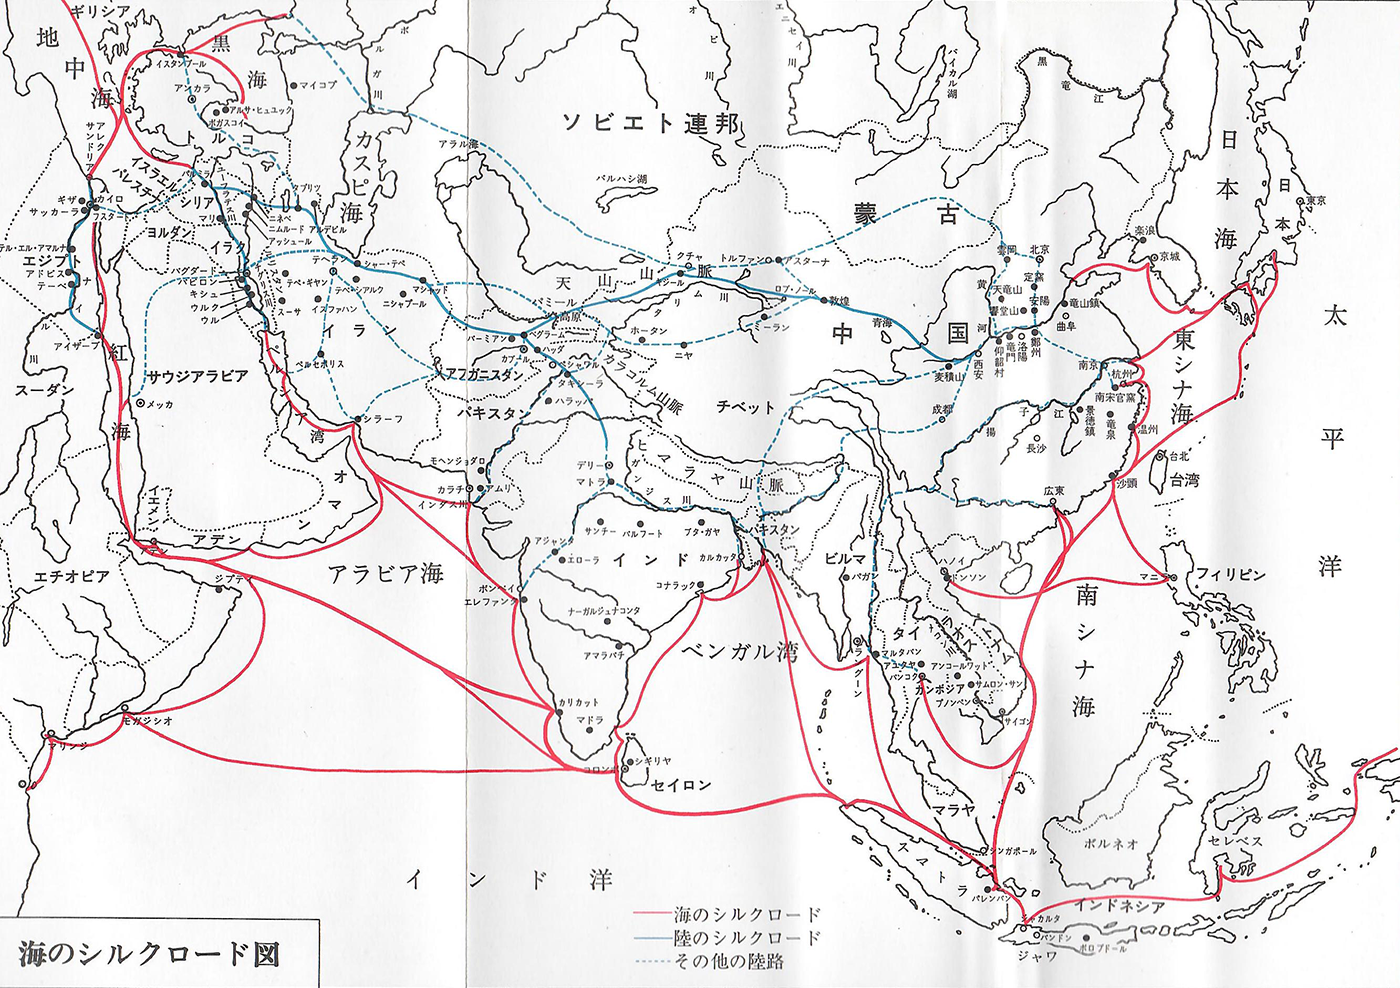 Inventing the 'Maritime Silk Road' | Modern Asian Studies